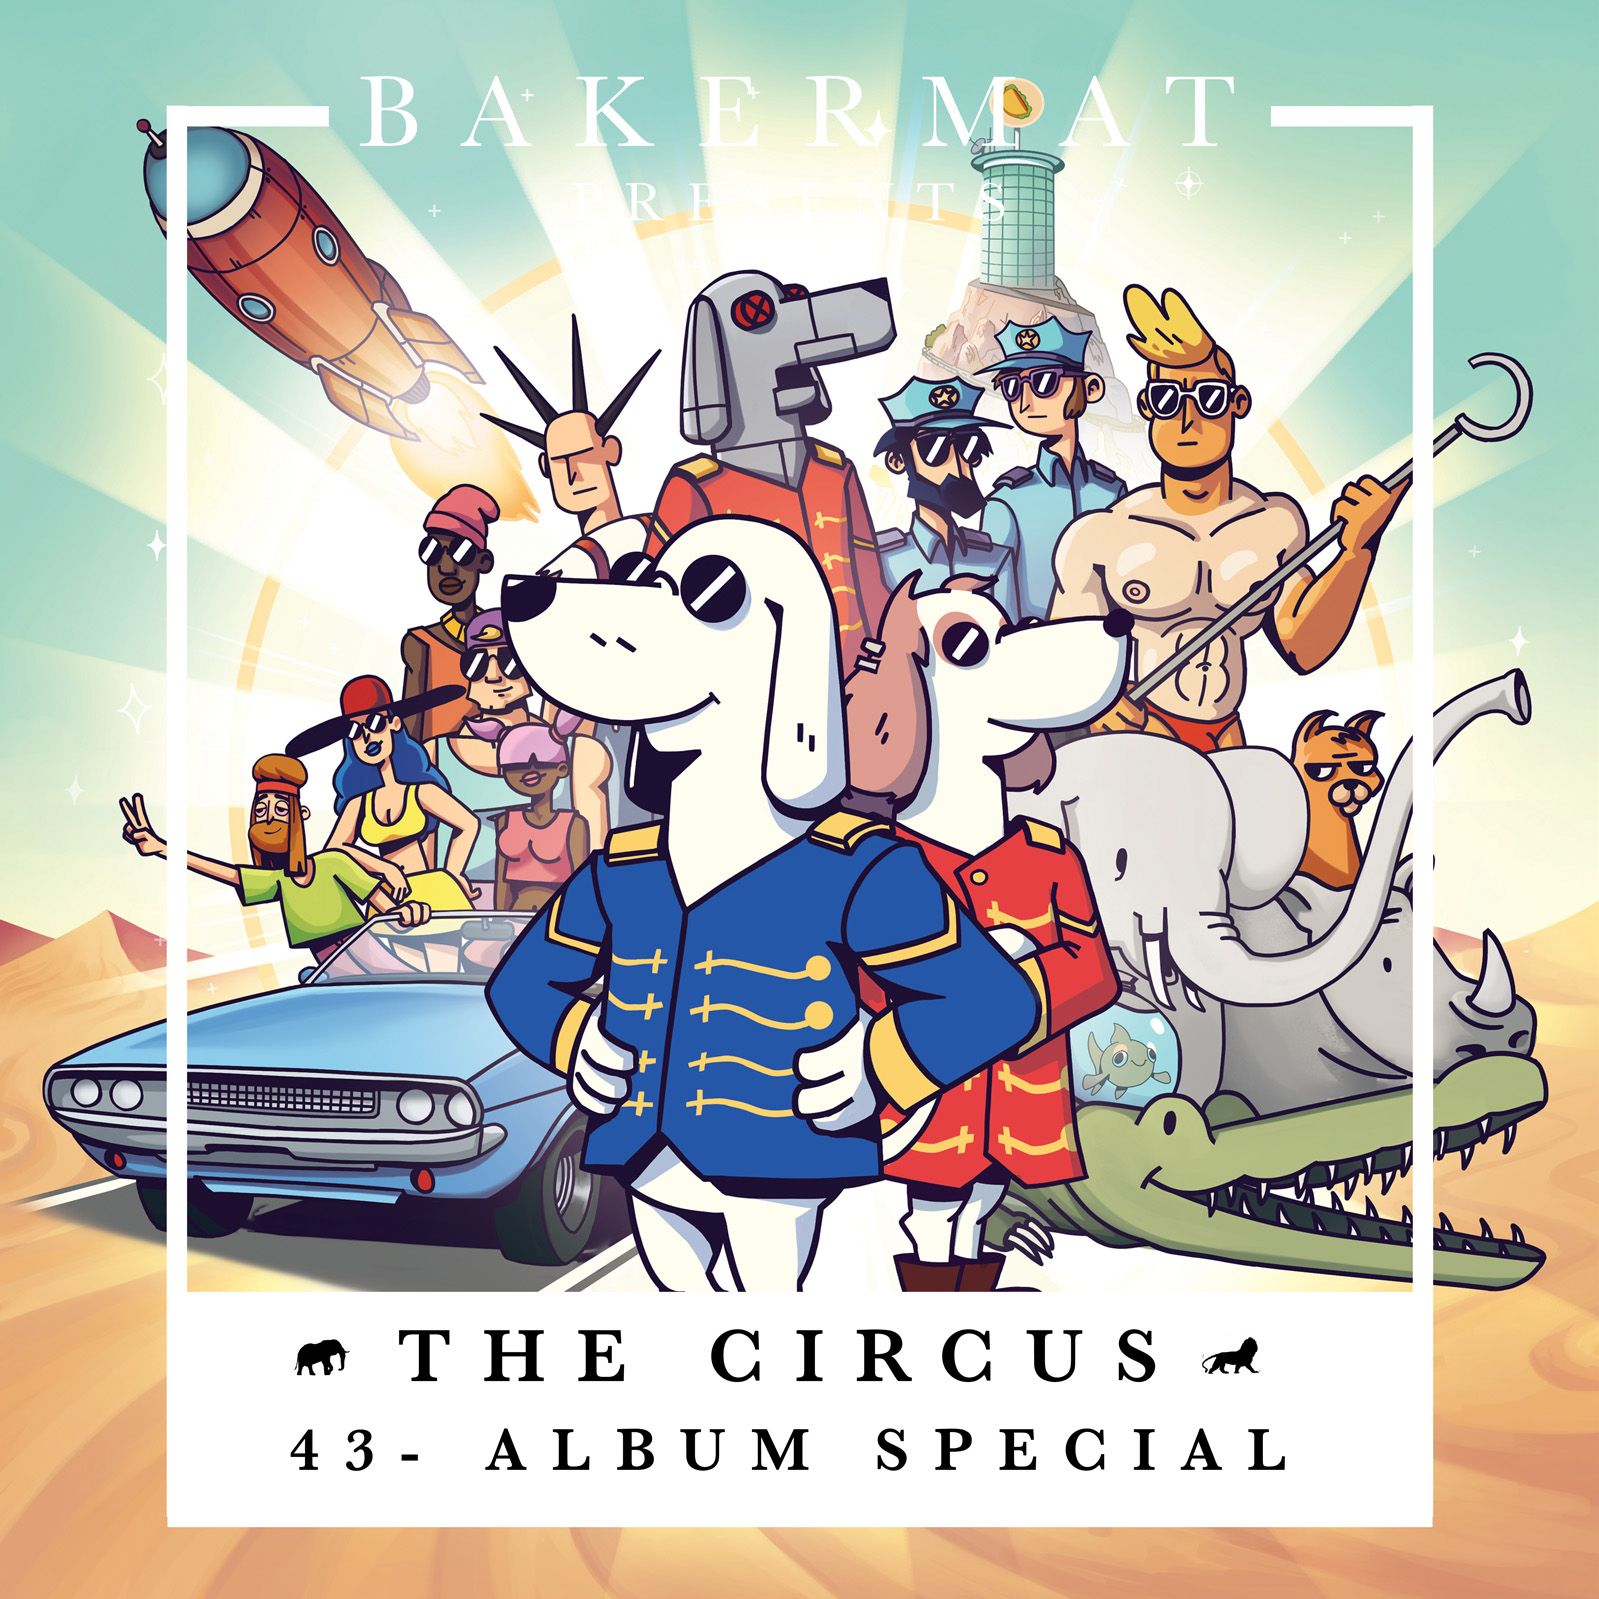 Bakermat presents The Circus #043